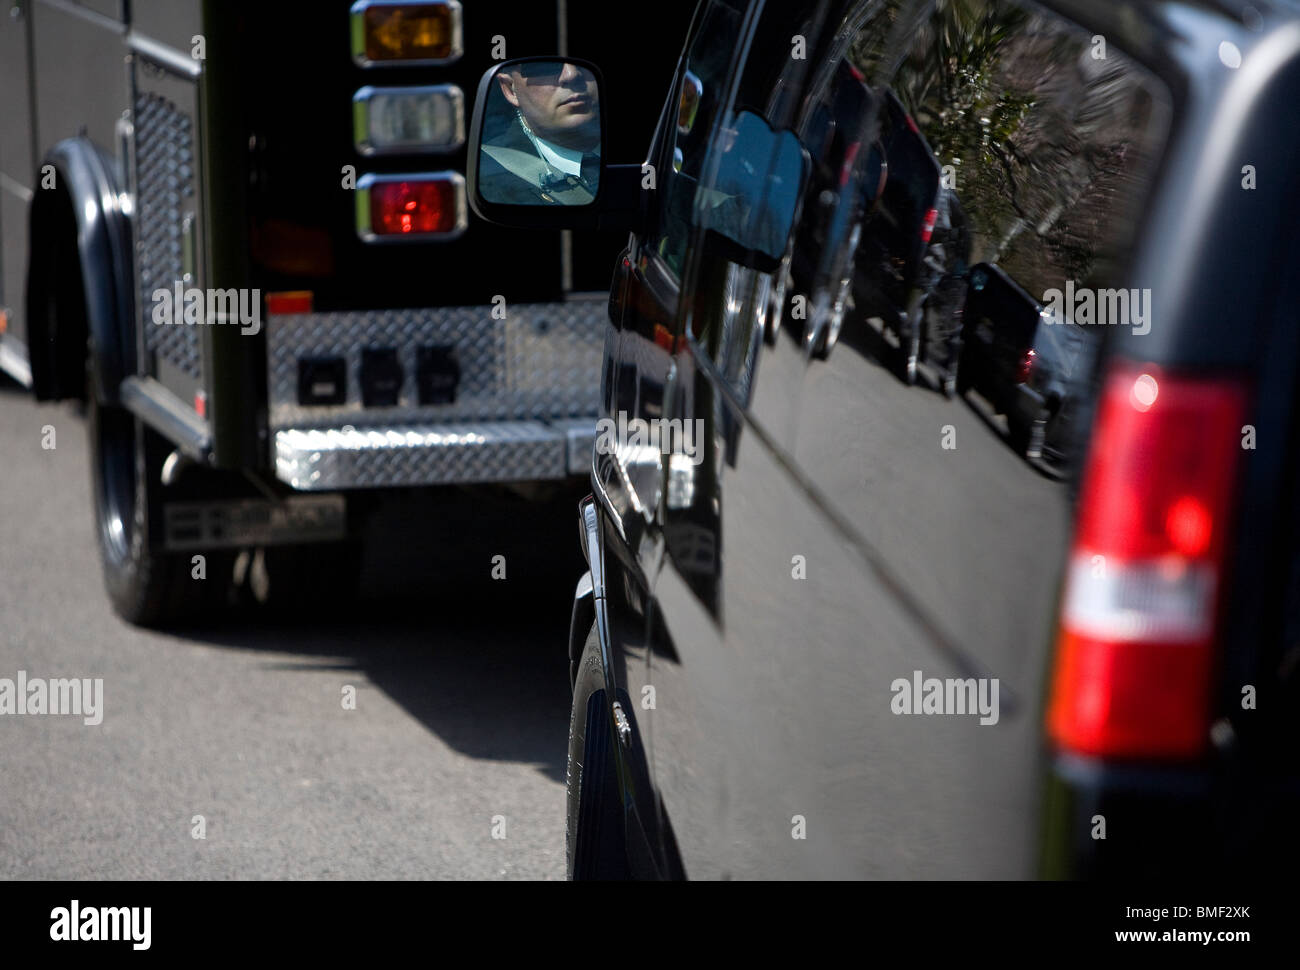 President Barack Obama's motorcade outside of the White House. Stock Photo